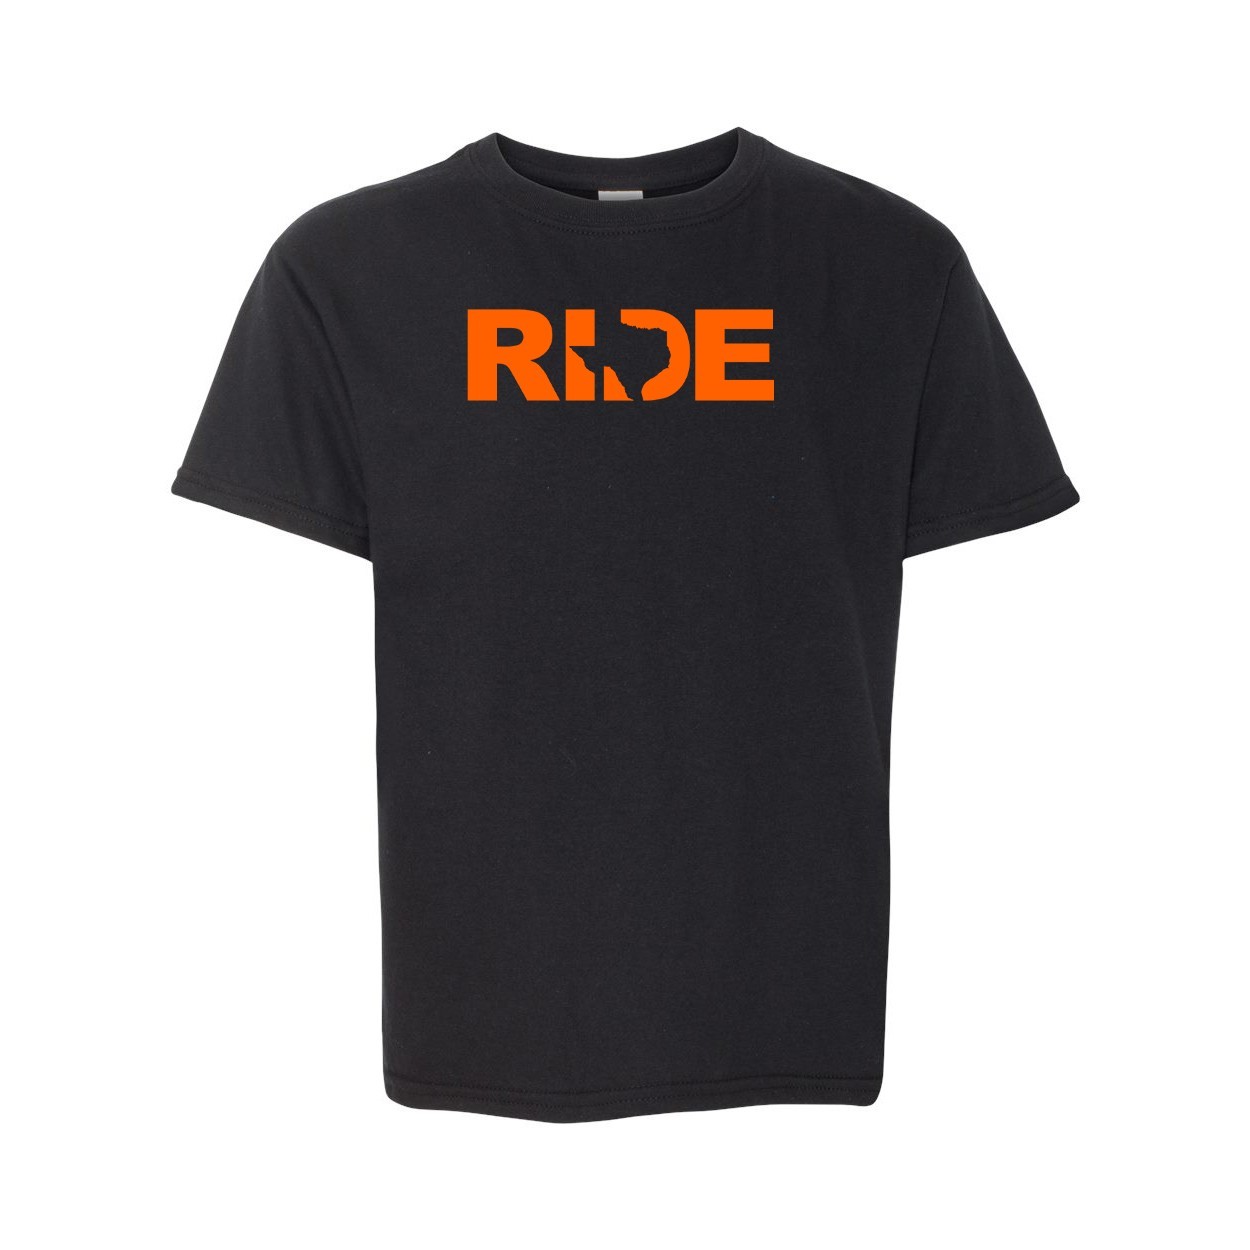 Ride Texas Classic Youth T-Shirt Black (Orange Logo)